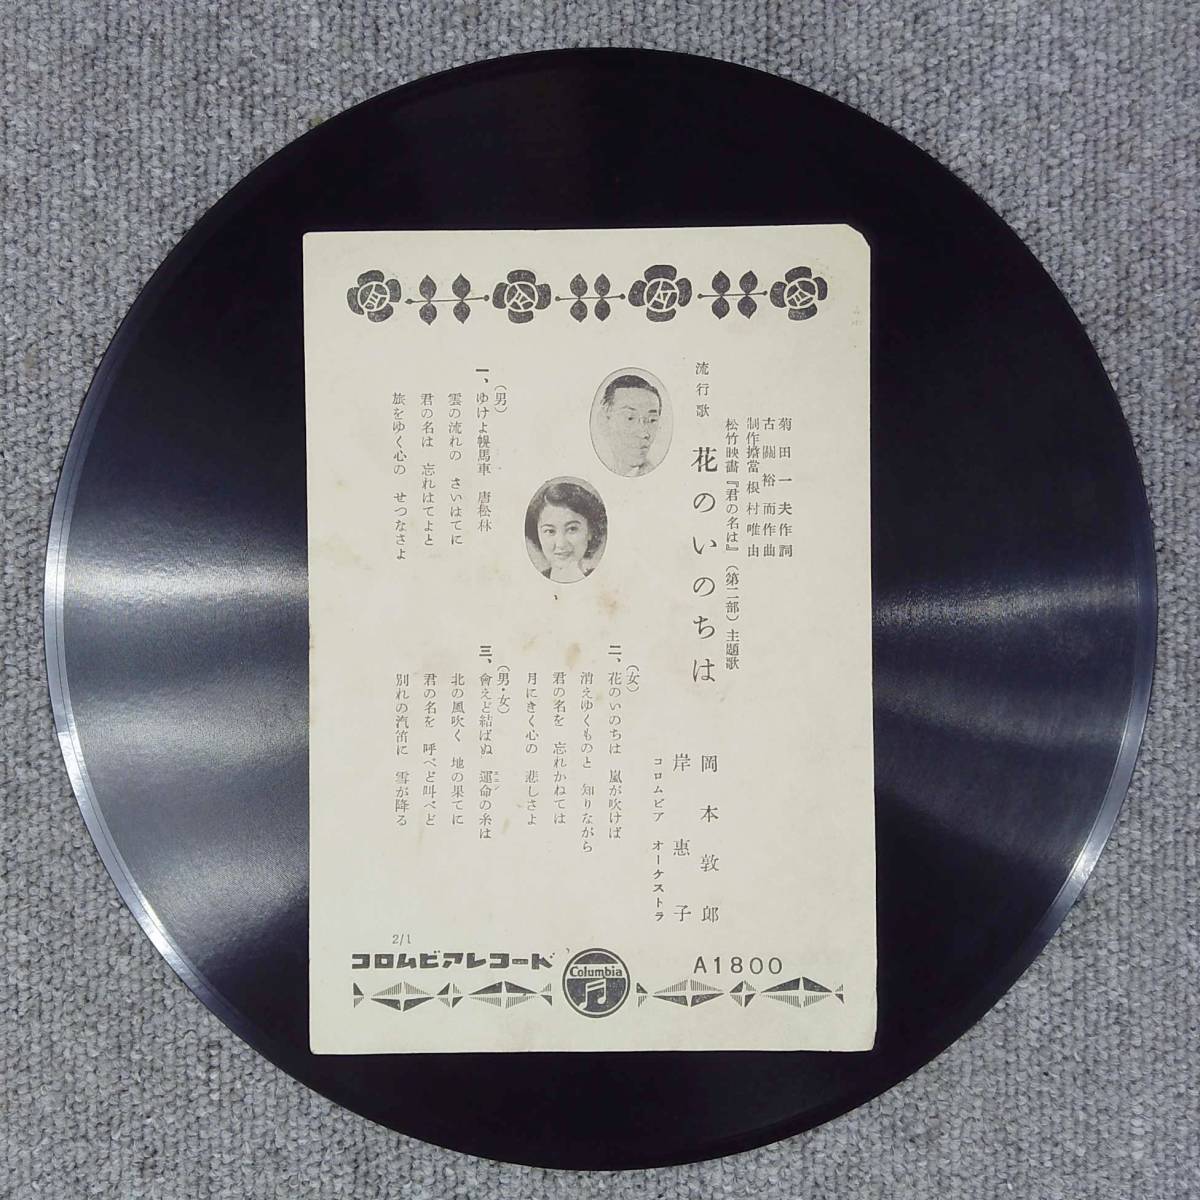 SP record record woven .../ black 100 .. ./ Okamoto ..**.../ flower. .. . is song bending fashion .V-41793ko rom Via nw91